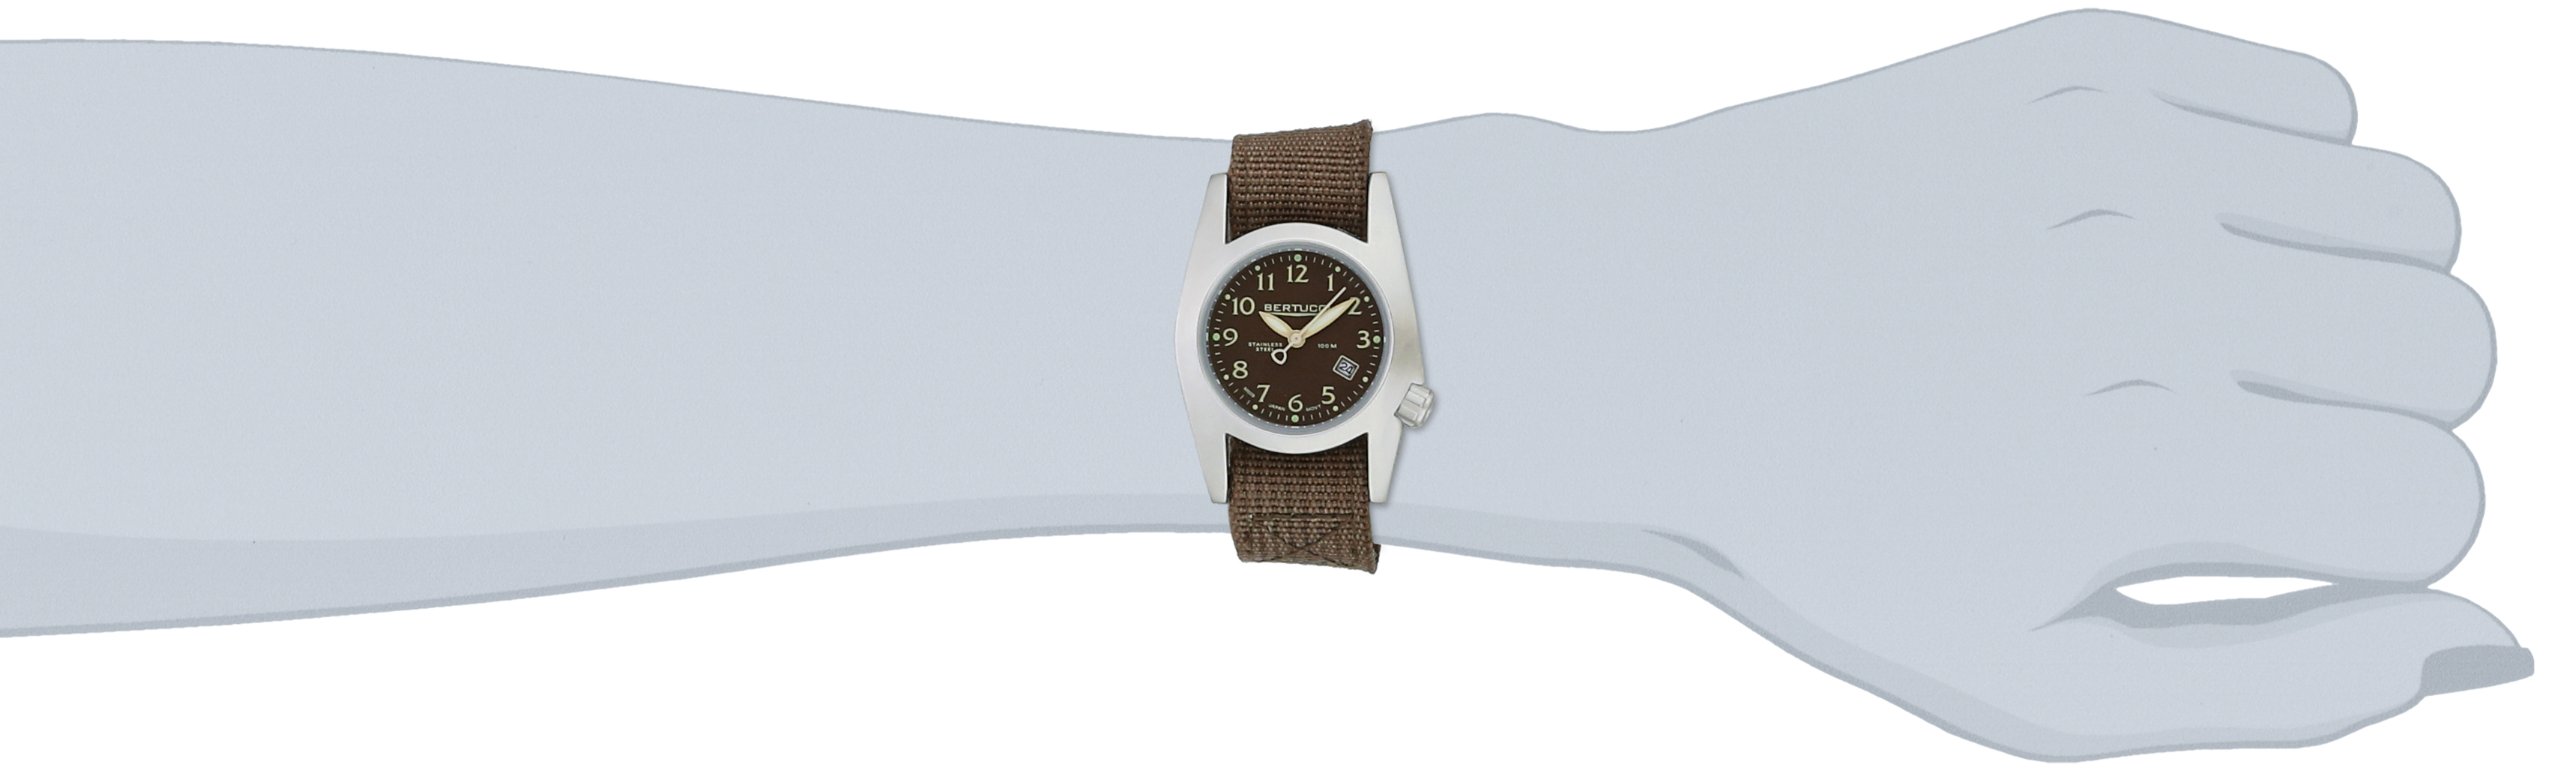 Bertucci Women's 18006 M-1S Durable Stainless Steel Field Watch